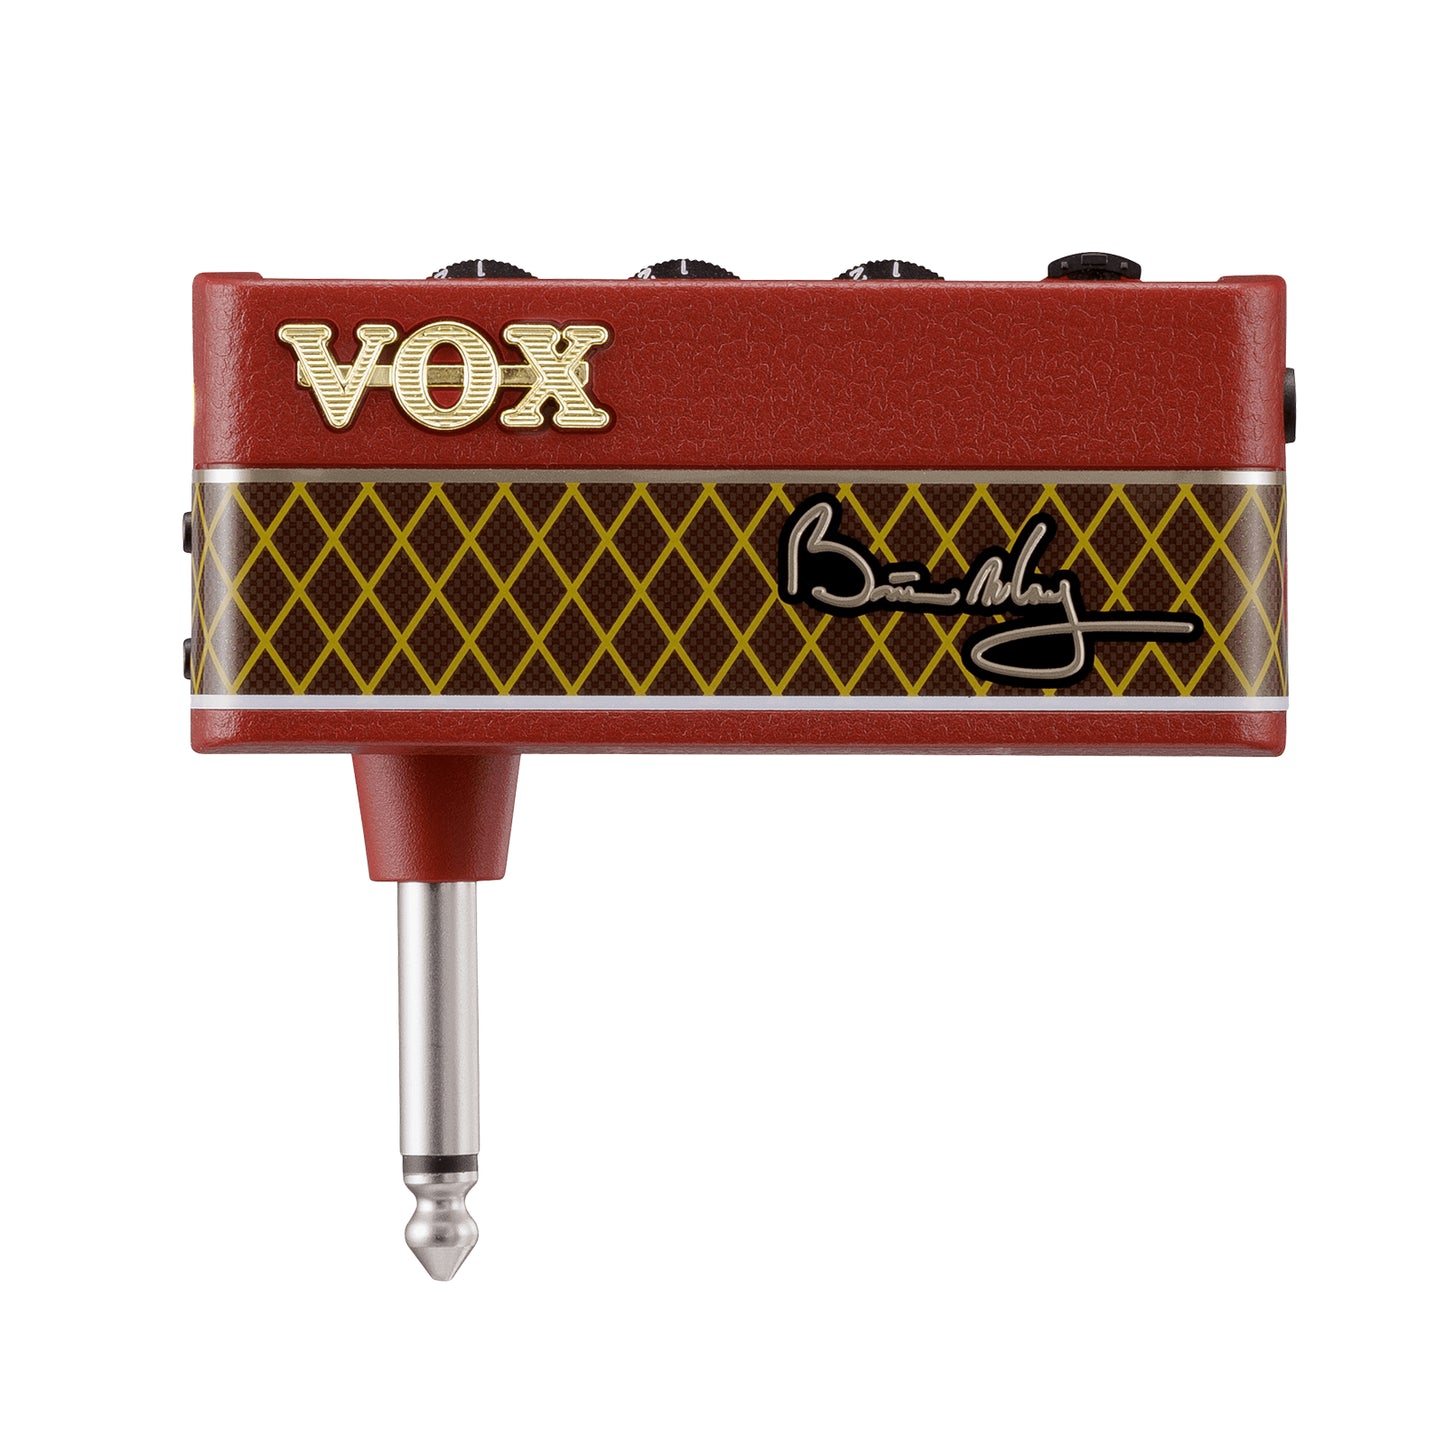 Vox Brian May Limited Amplug